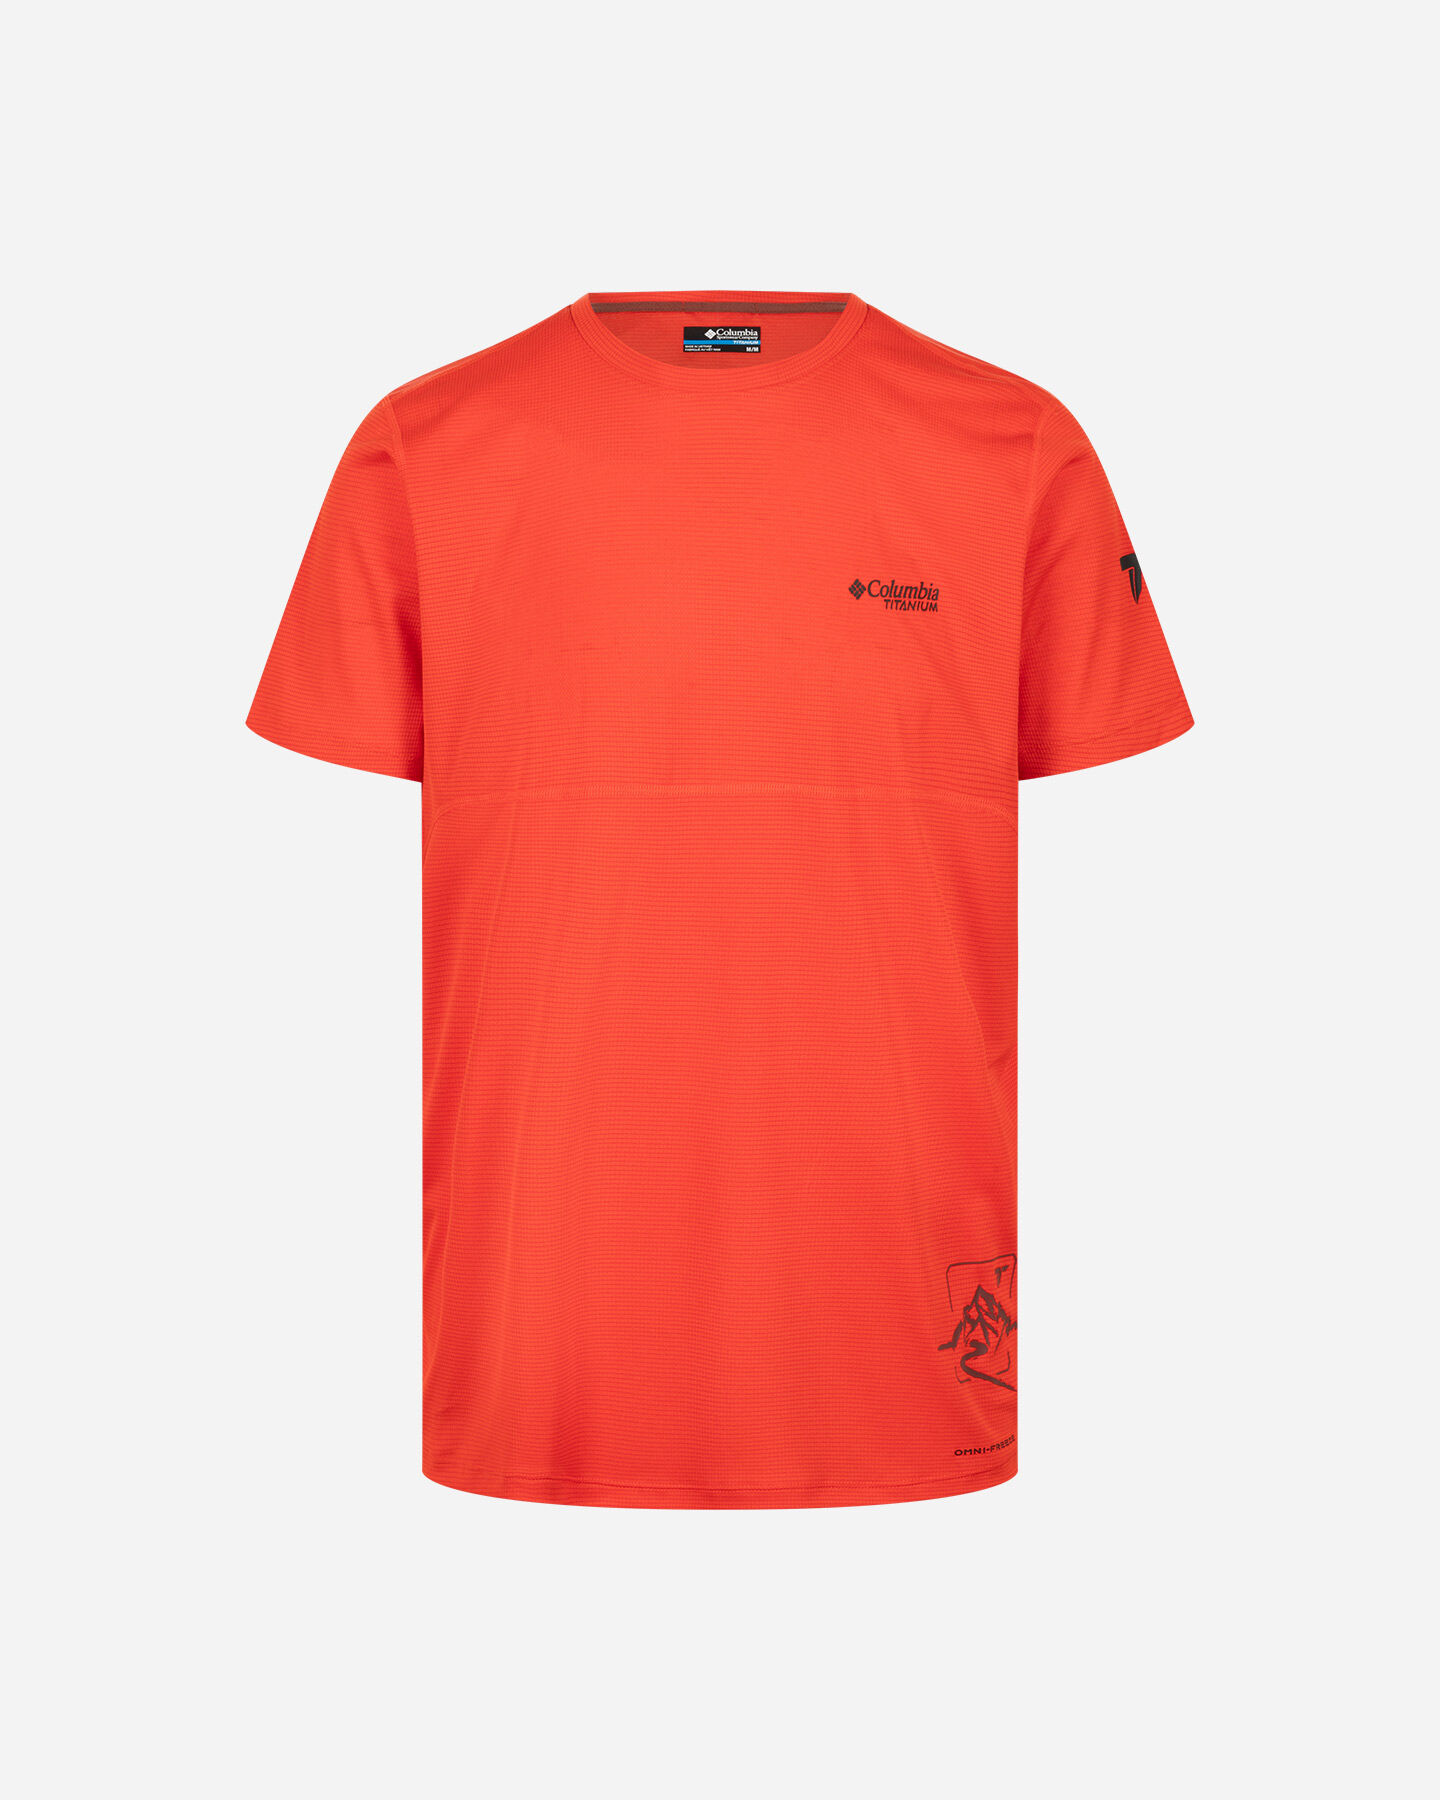  T-Shirt COLUMBIA CIRQUE RIVER M S5648694|839|S scatto 0